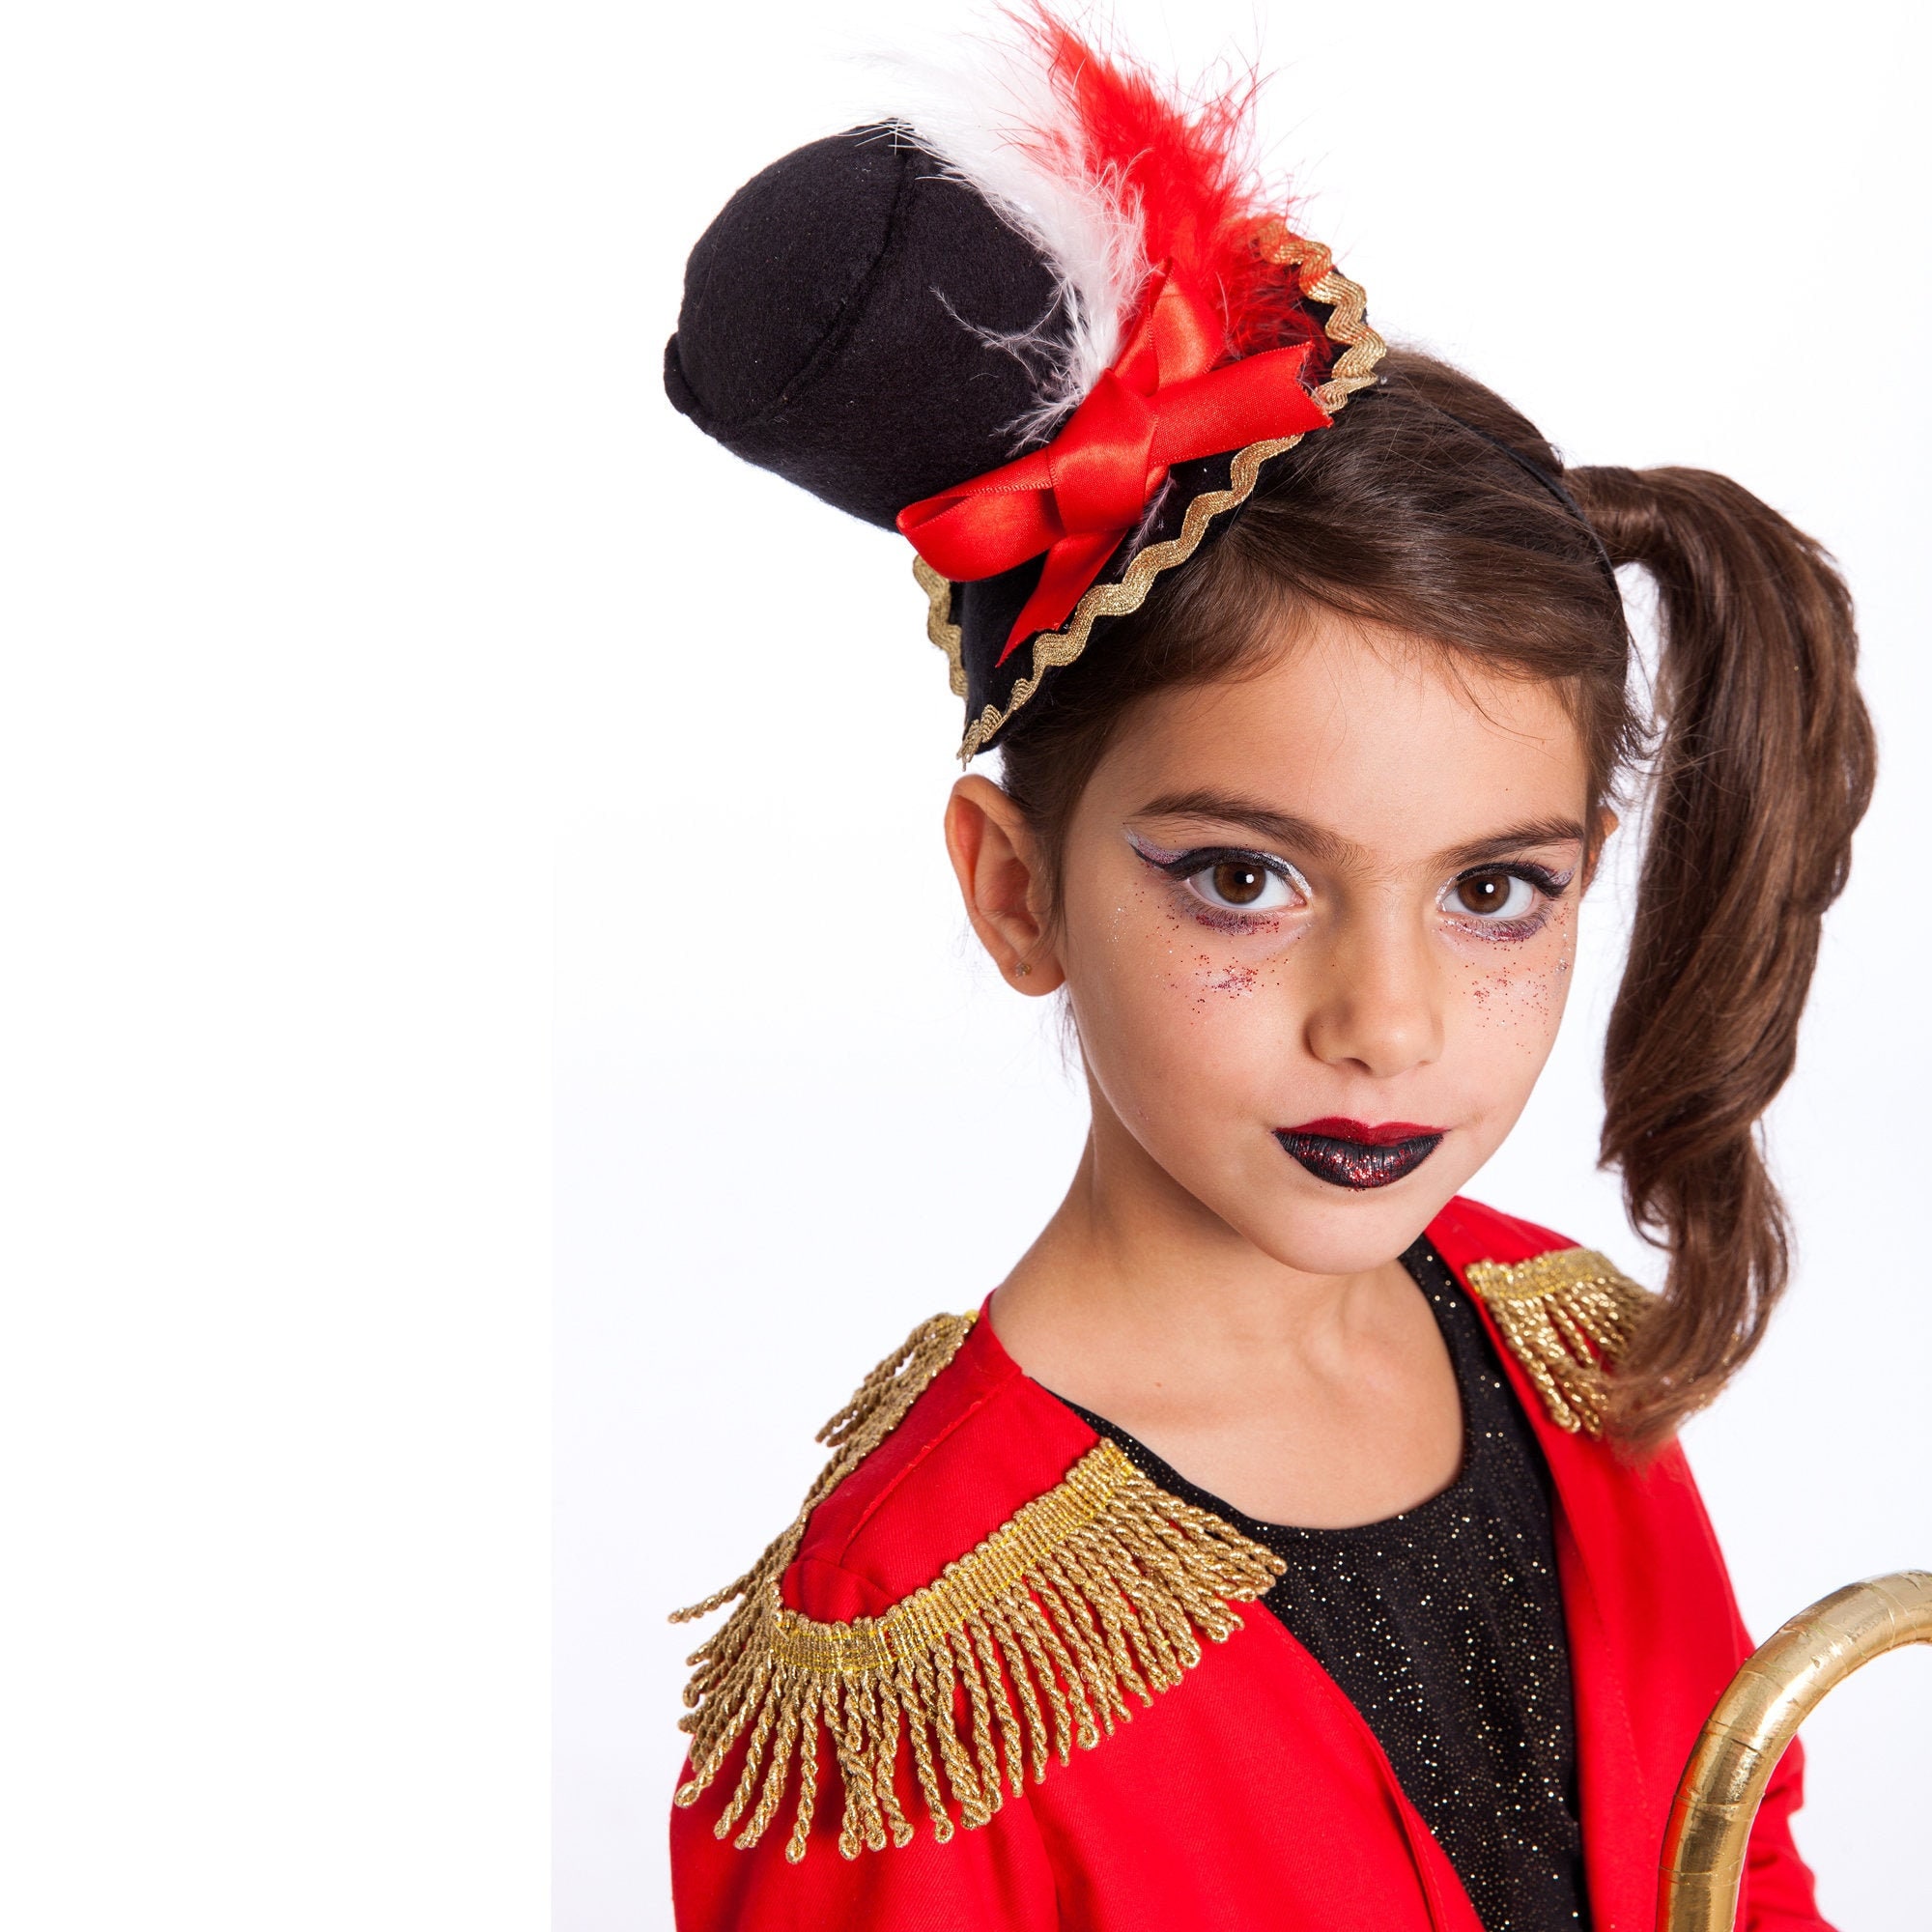 US Circus Ringmaster Costume Kids Girls Halloween Showman Outfit Mesh Tutu Dress 